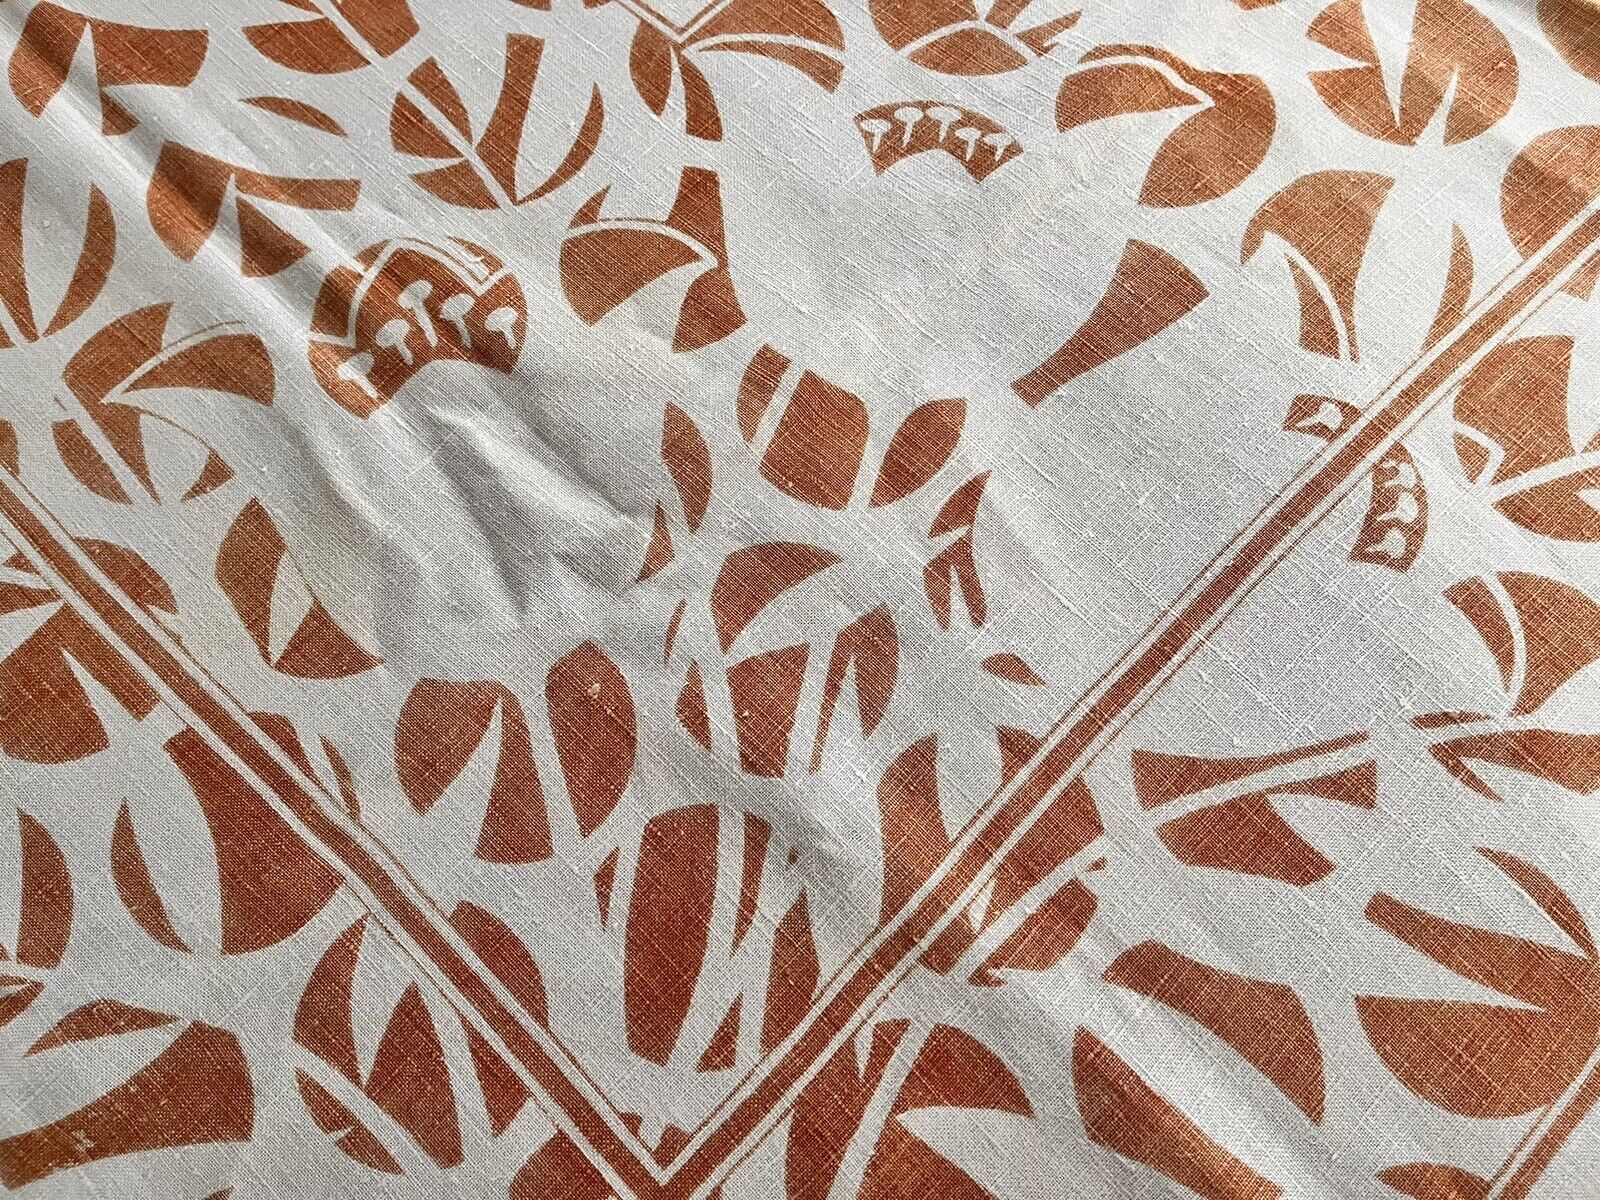 PERFECT FOR FALL Vintage Linen Tablecloth Rusty Pumpkin Orange 50x52